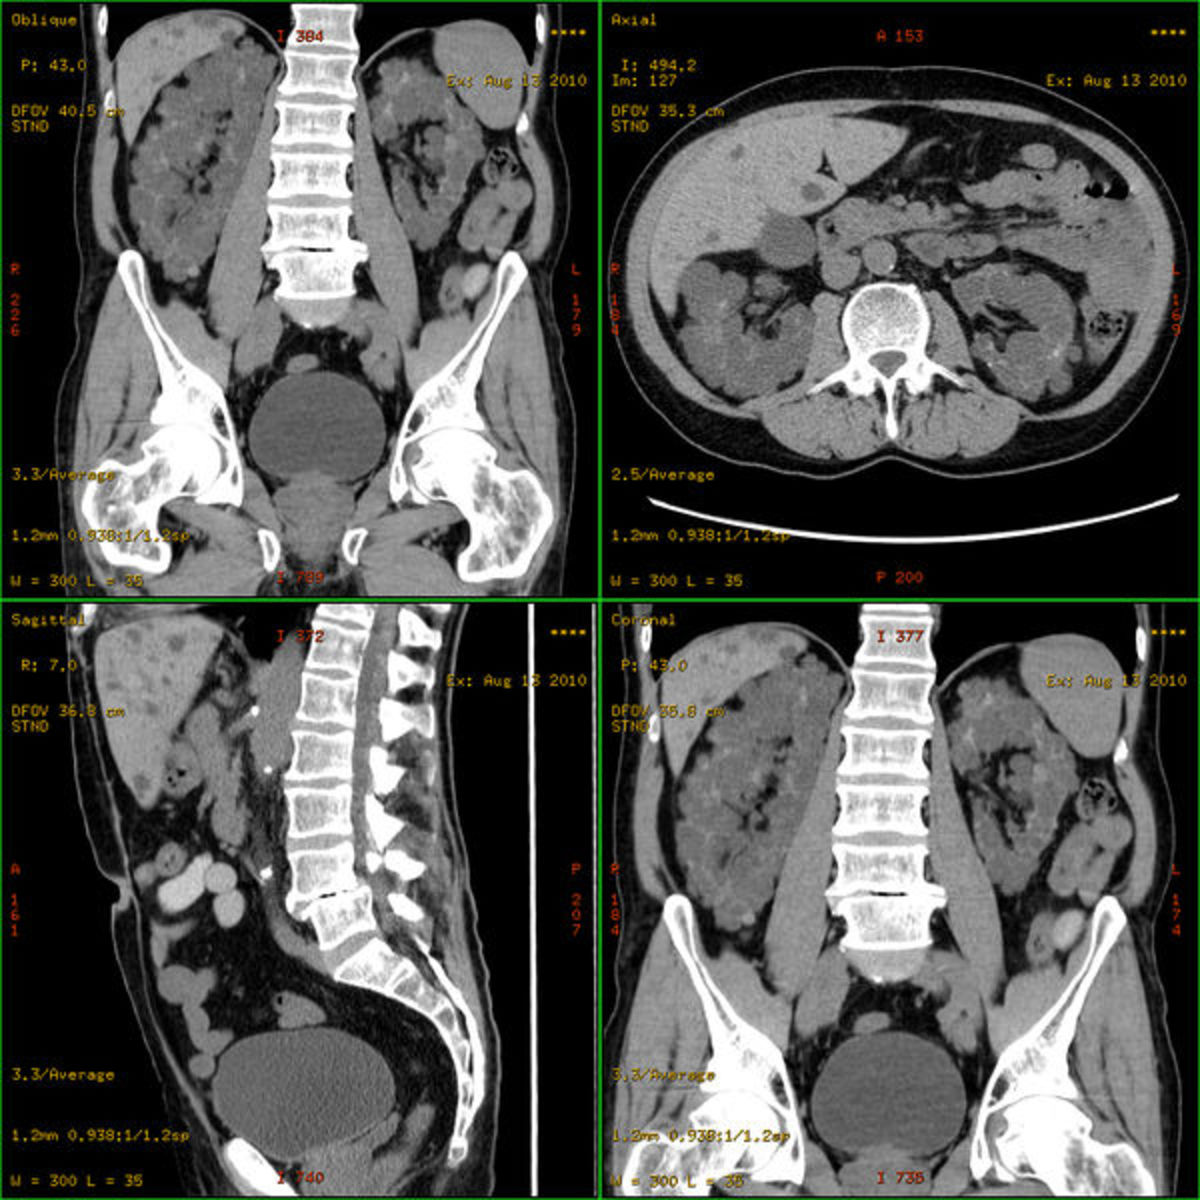 autosomal dominant polyzystic kidney disease, native CT scan Author: Hg6996